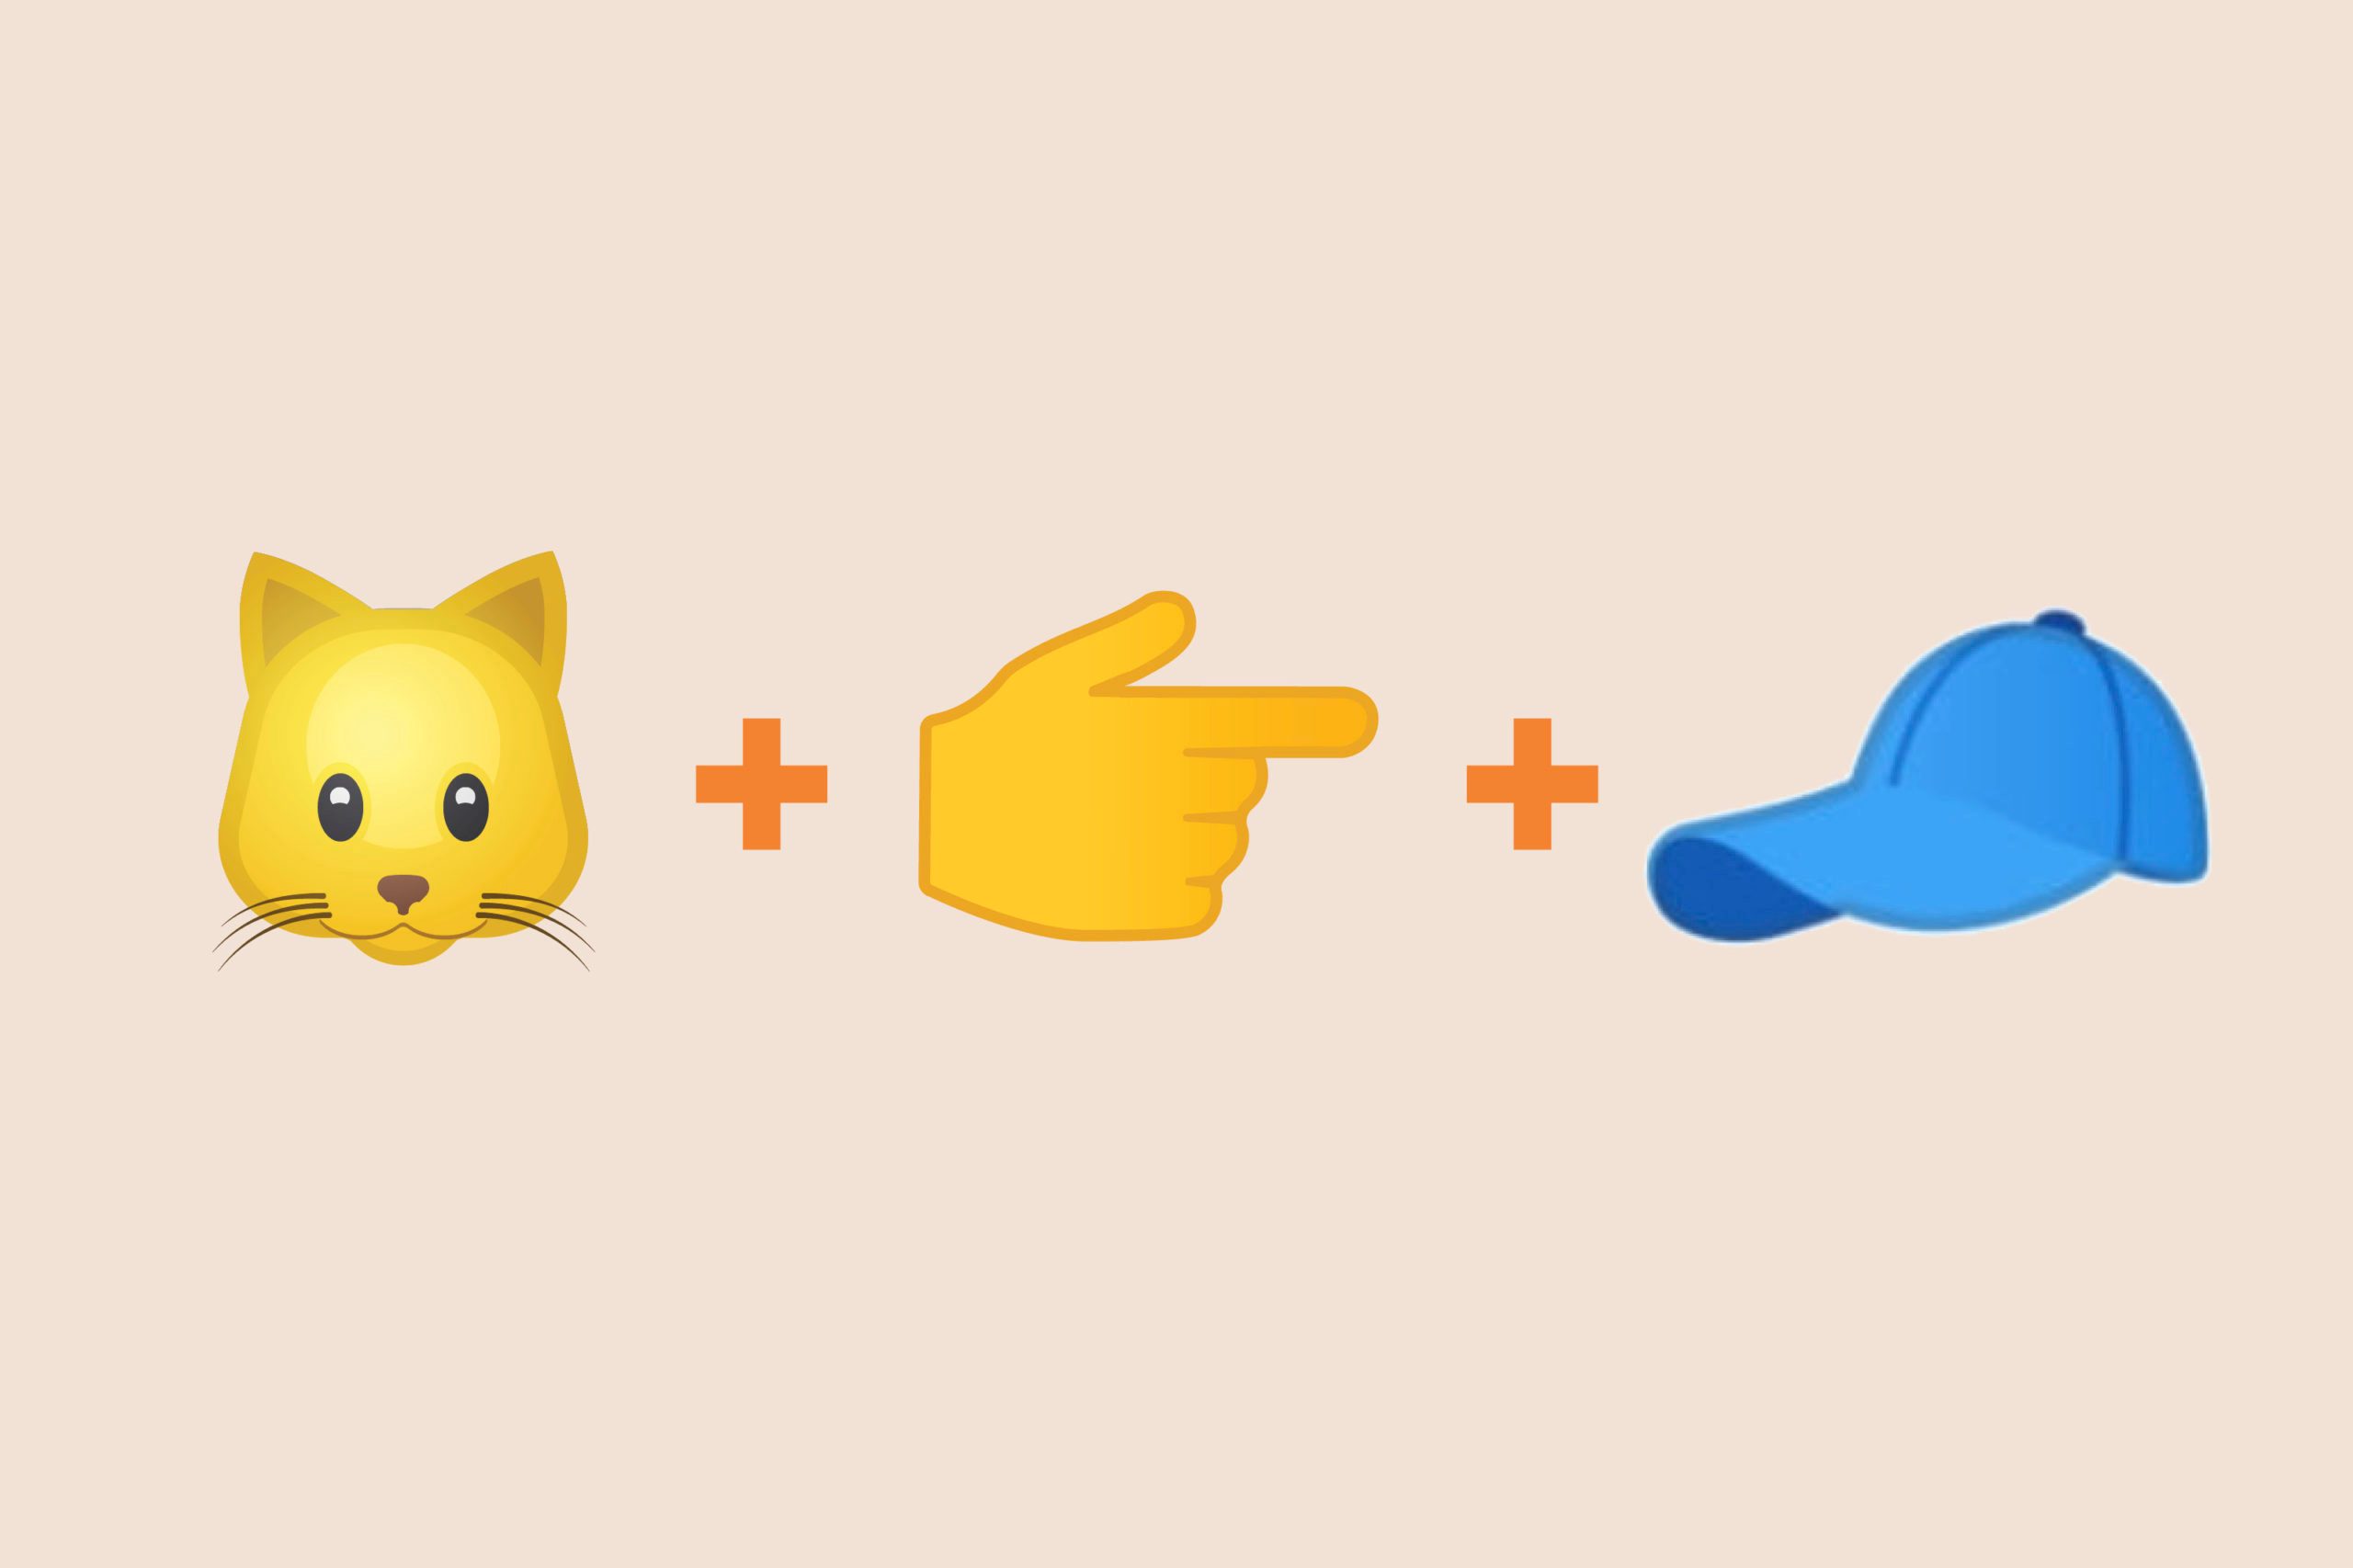 Cat emoji + pointing emoji + hat emoji